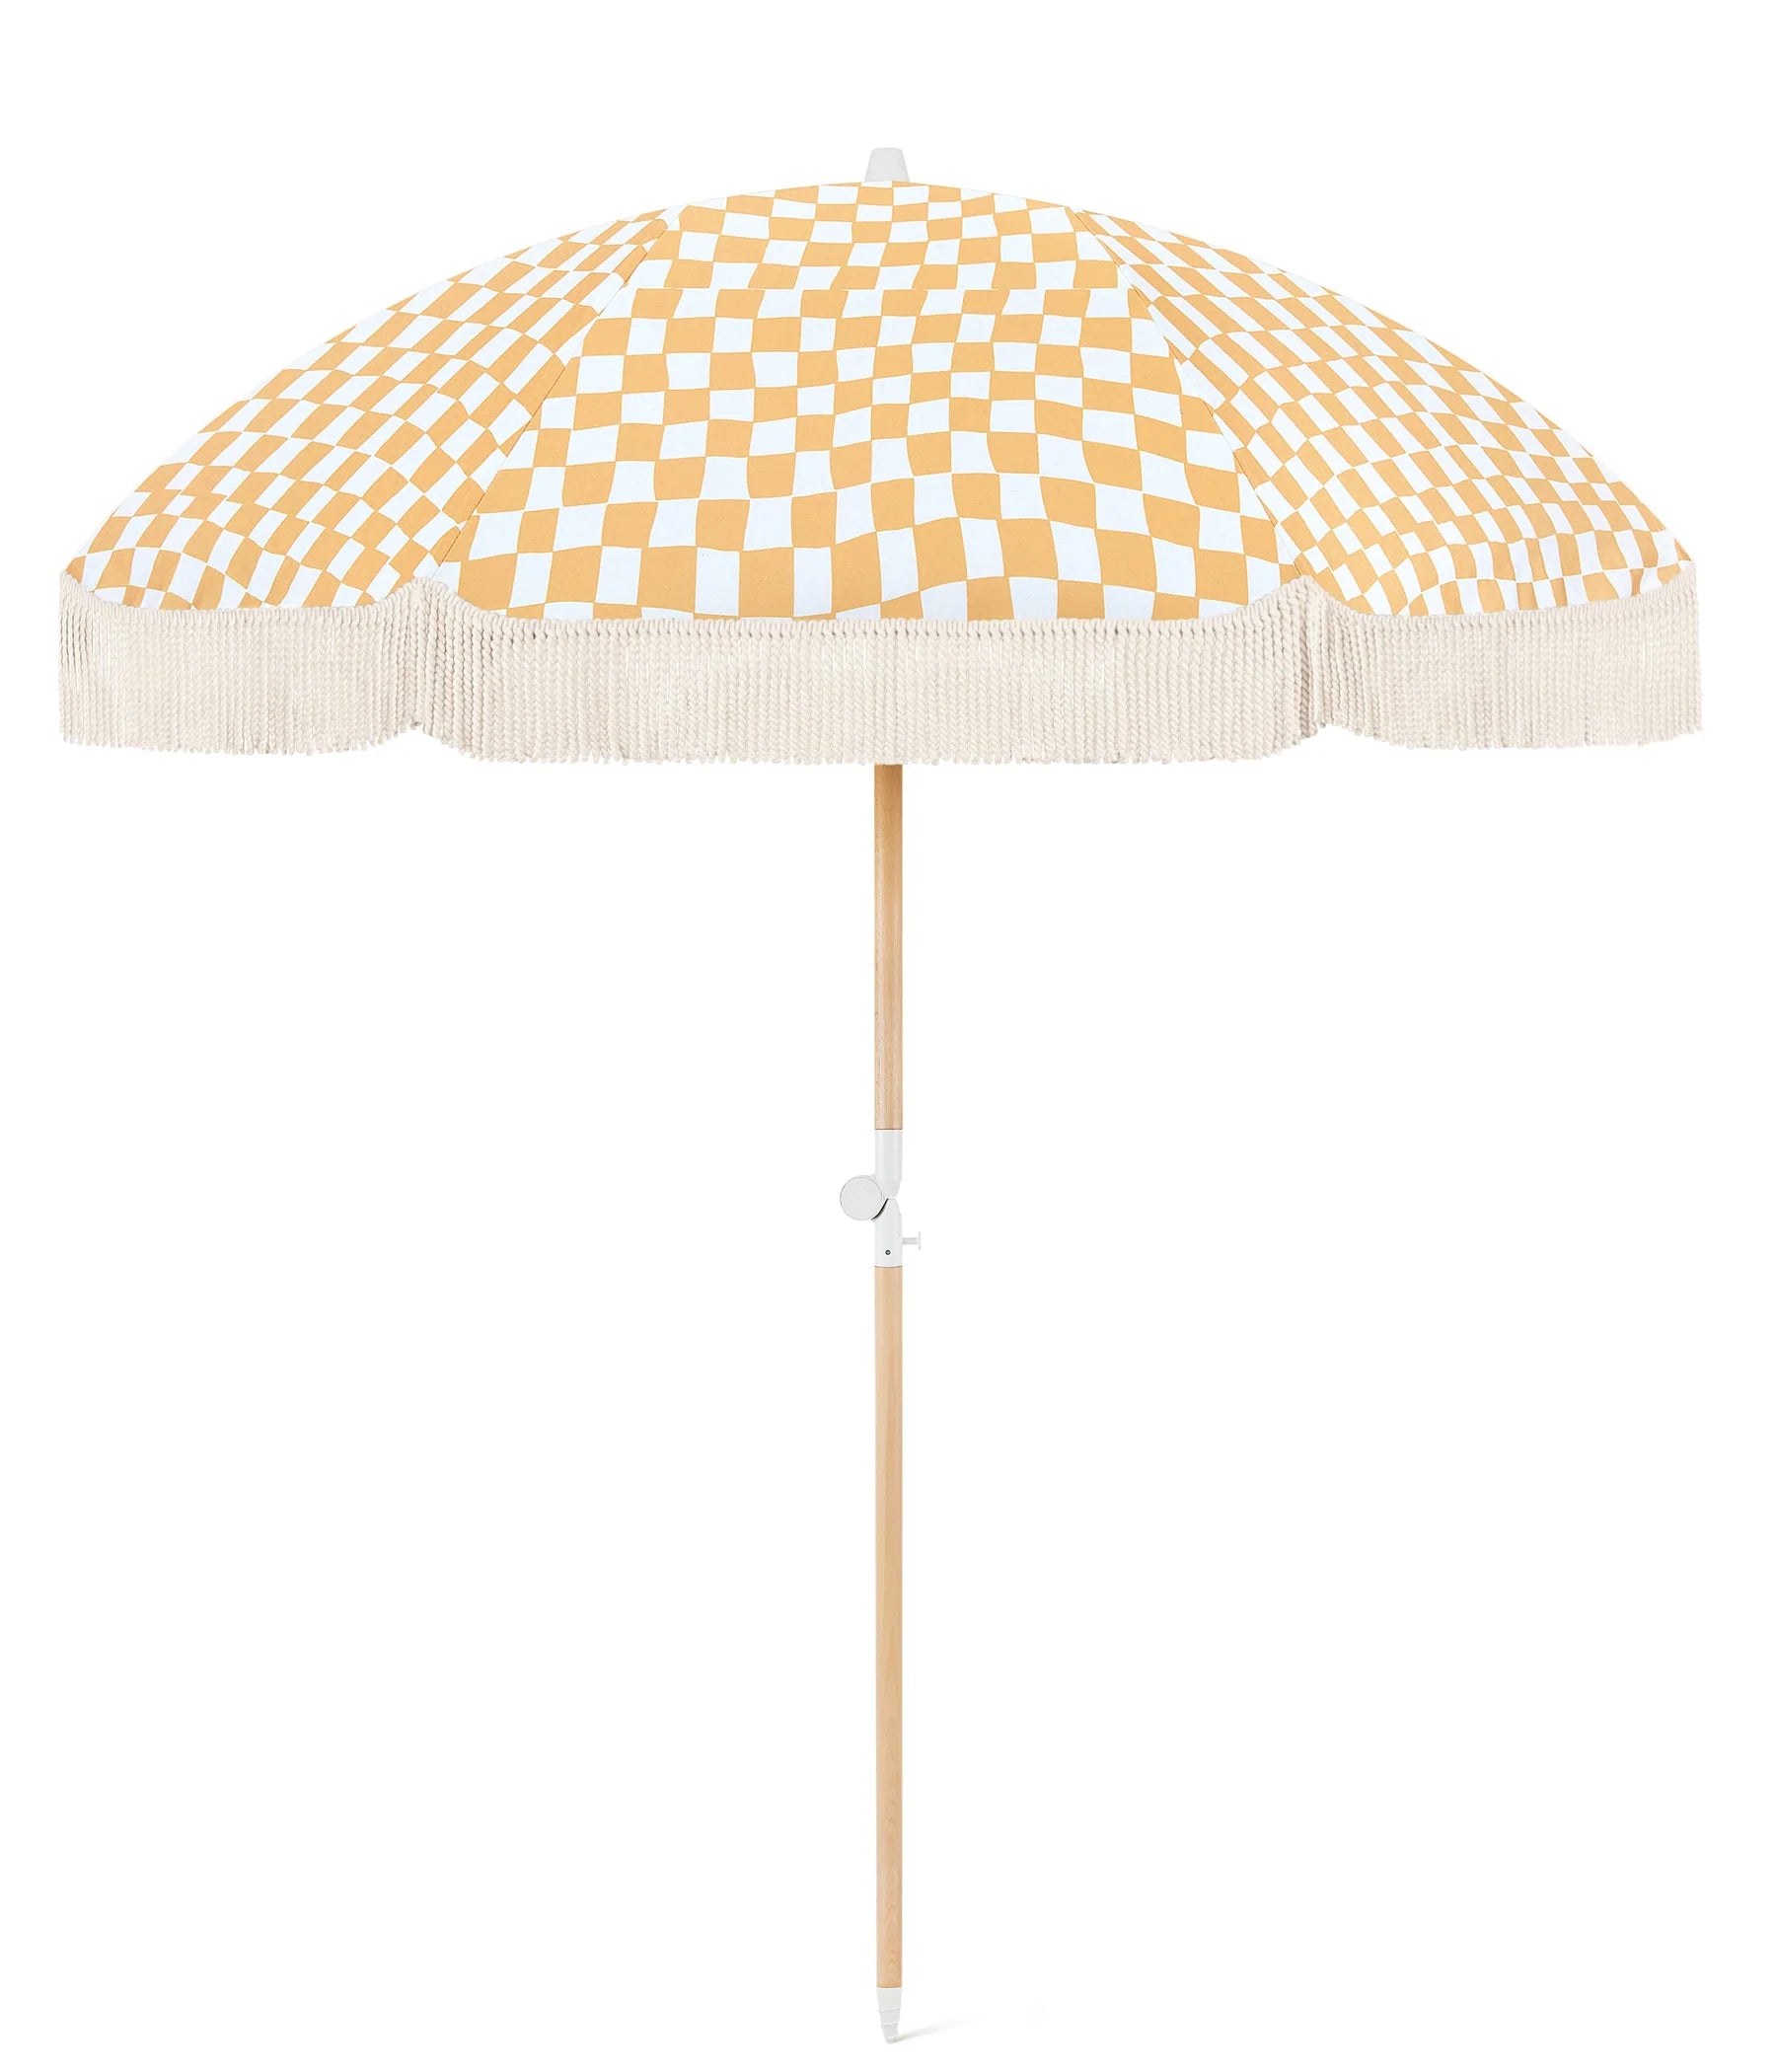 Sunday Supply Co. Golden Oasis Beach Umbrella